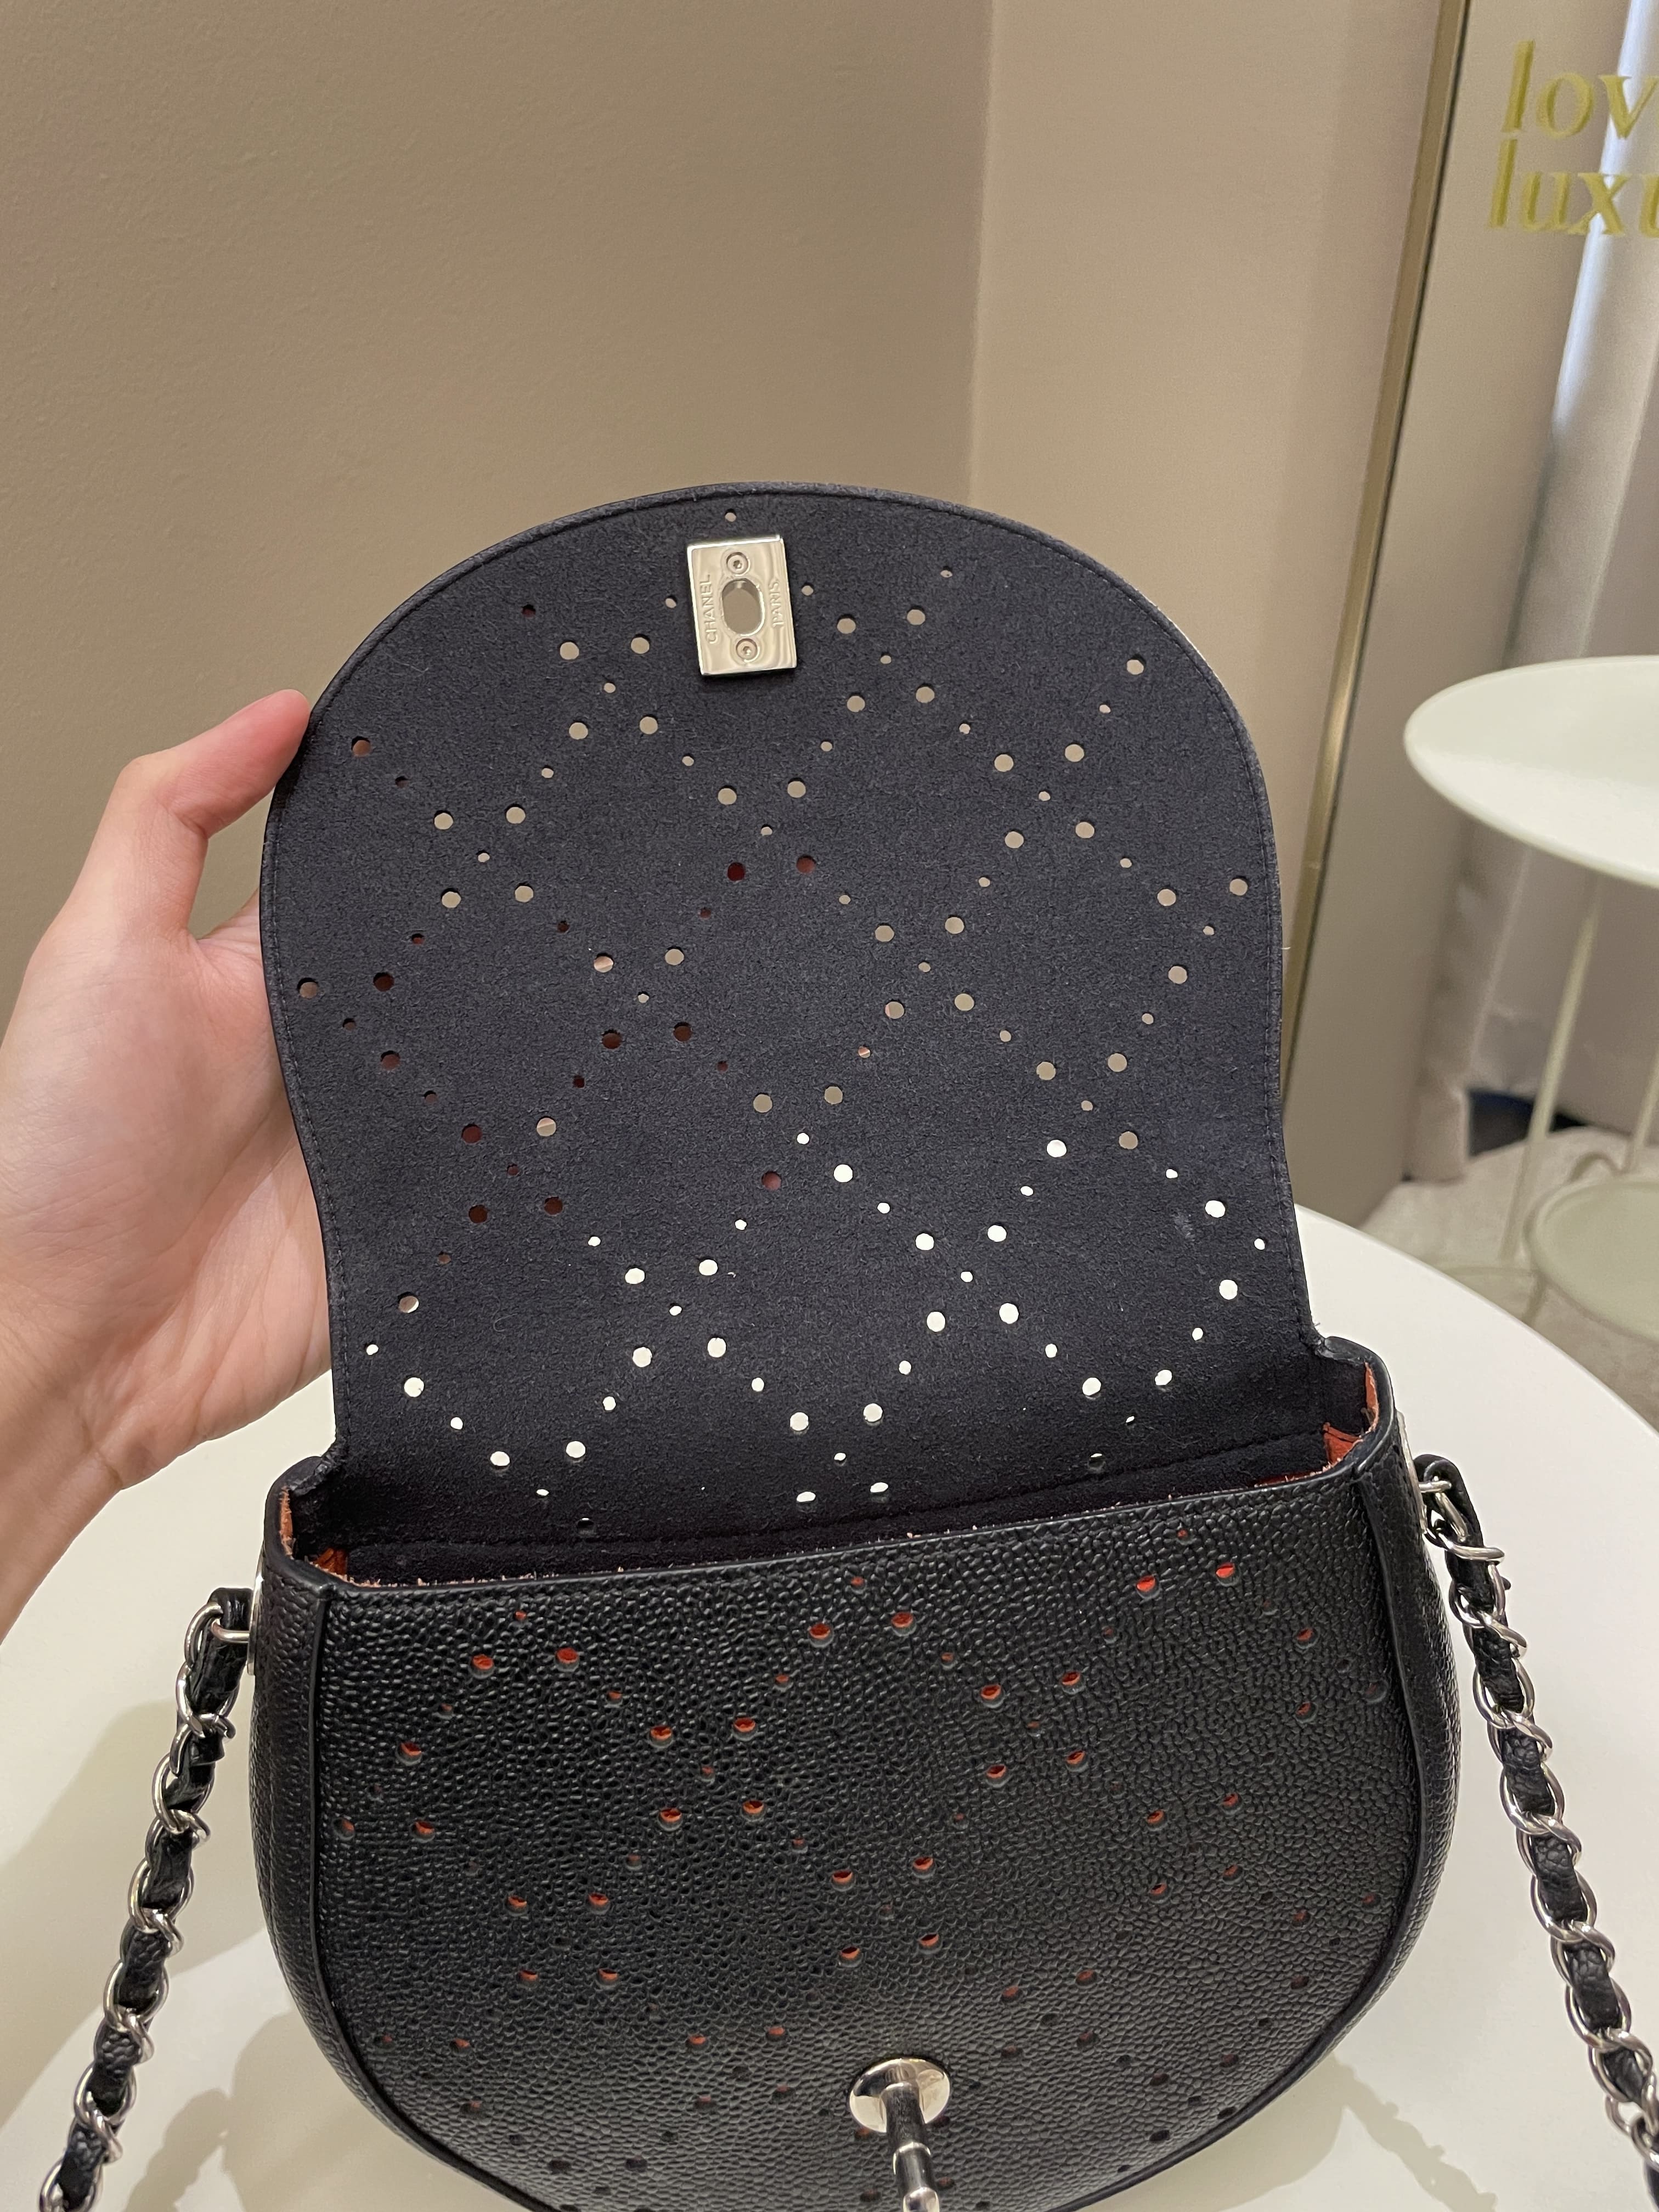 Chanel Perforated Curve Bag Black Caviar